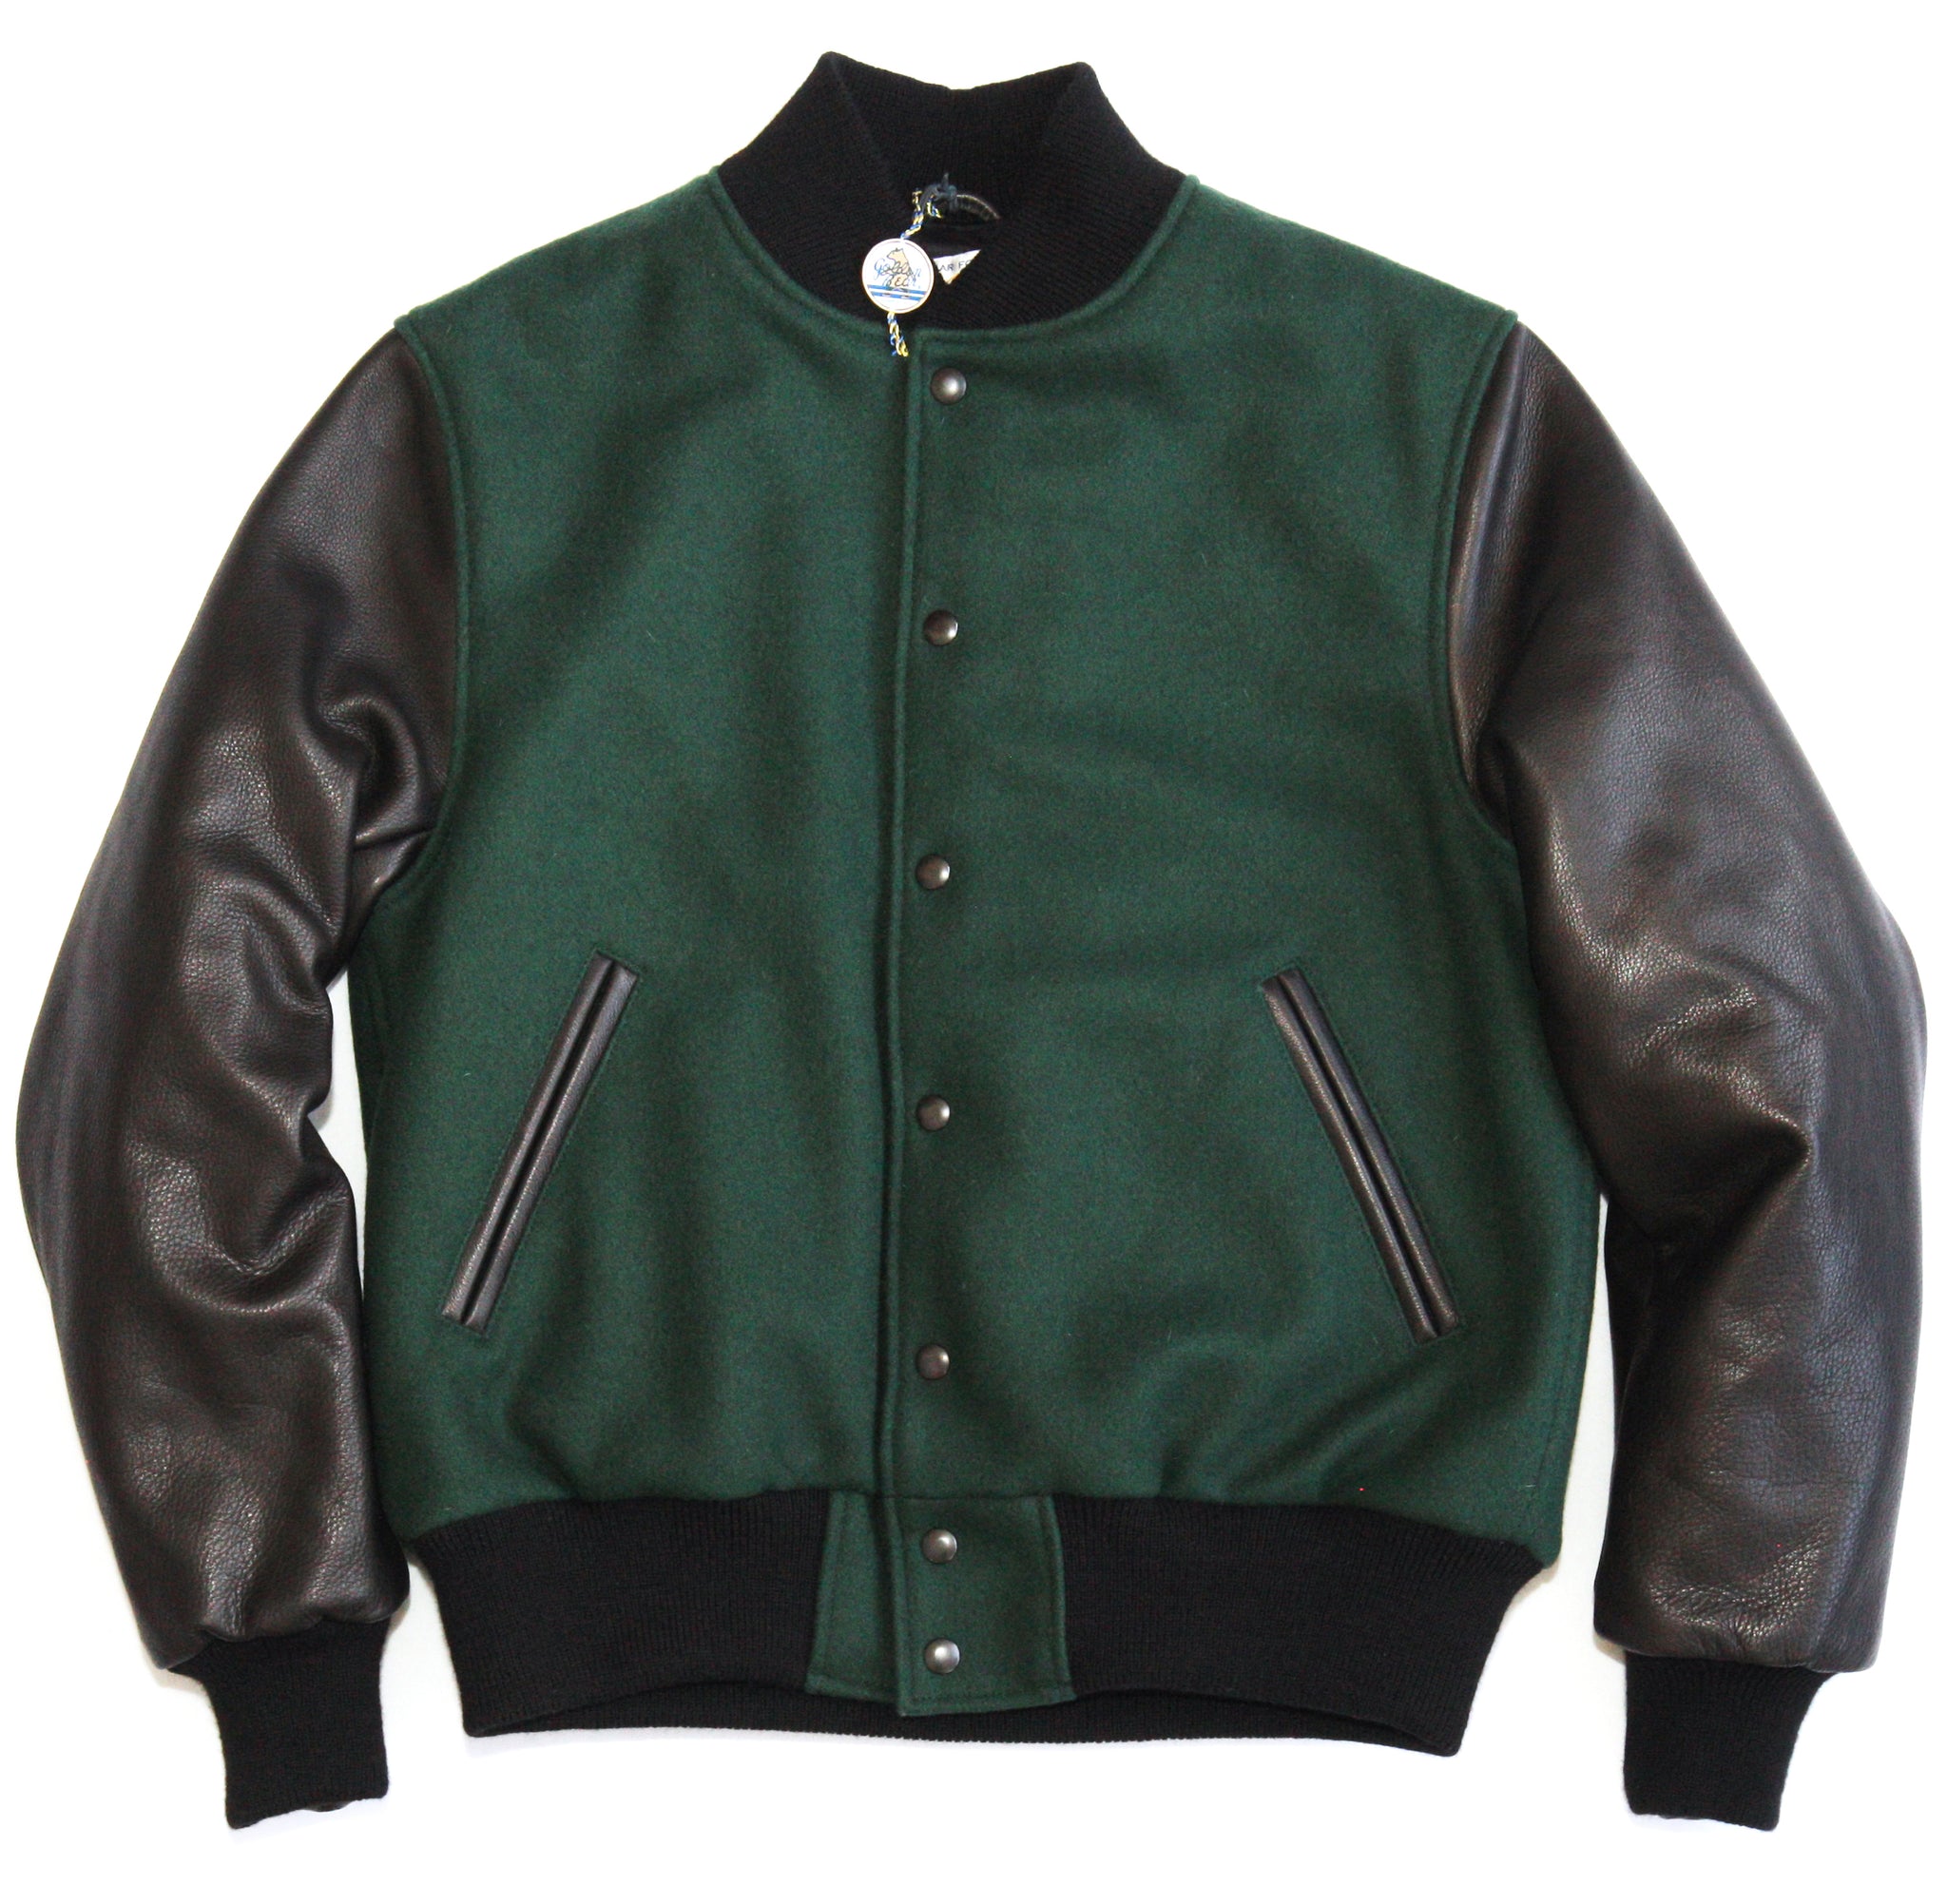 Green Varsity Jacket, COOL CREATIVE